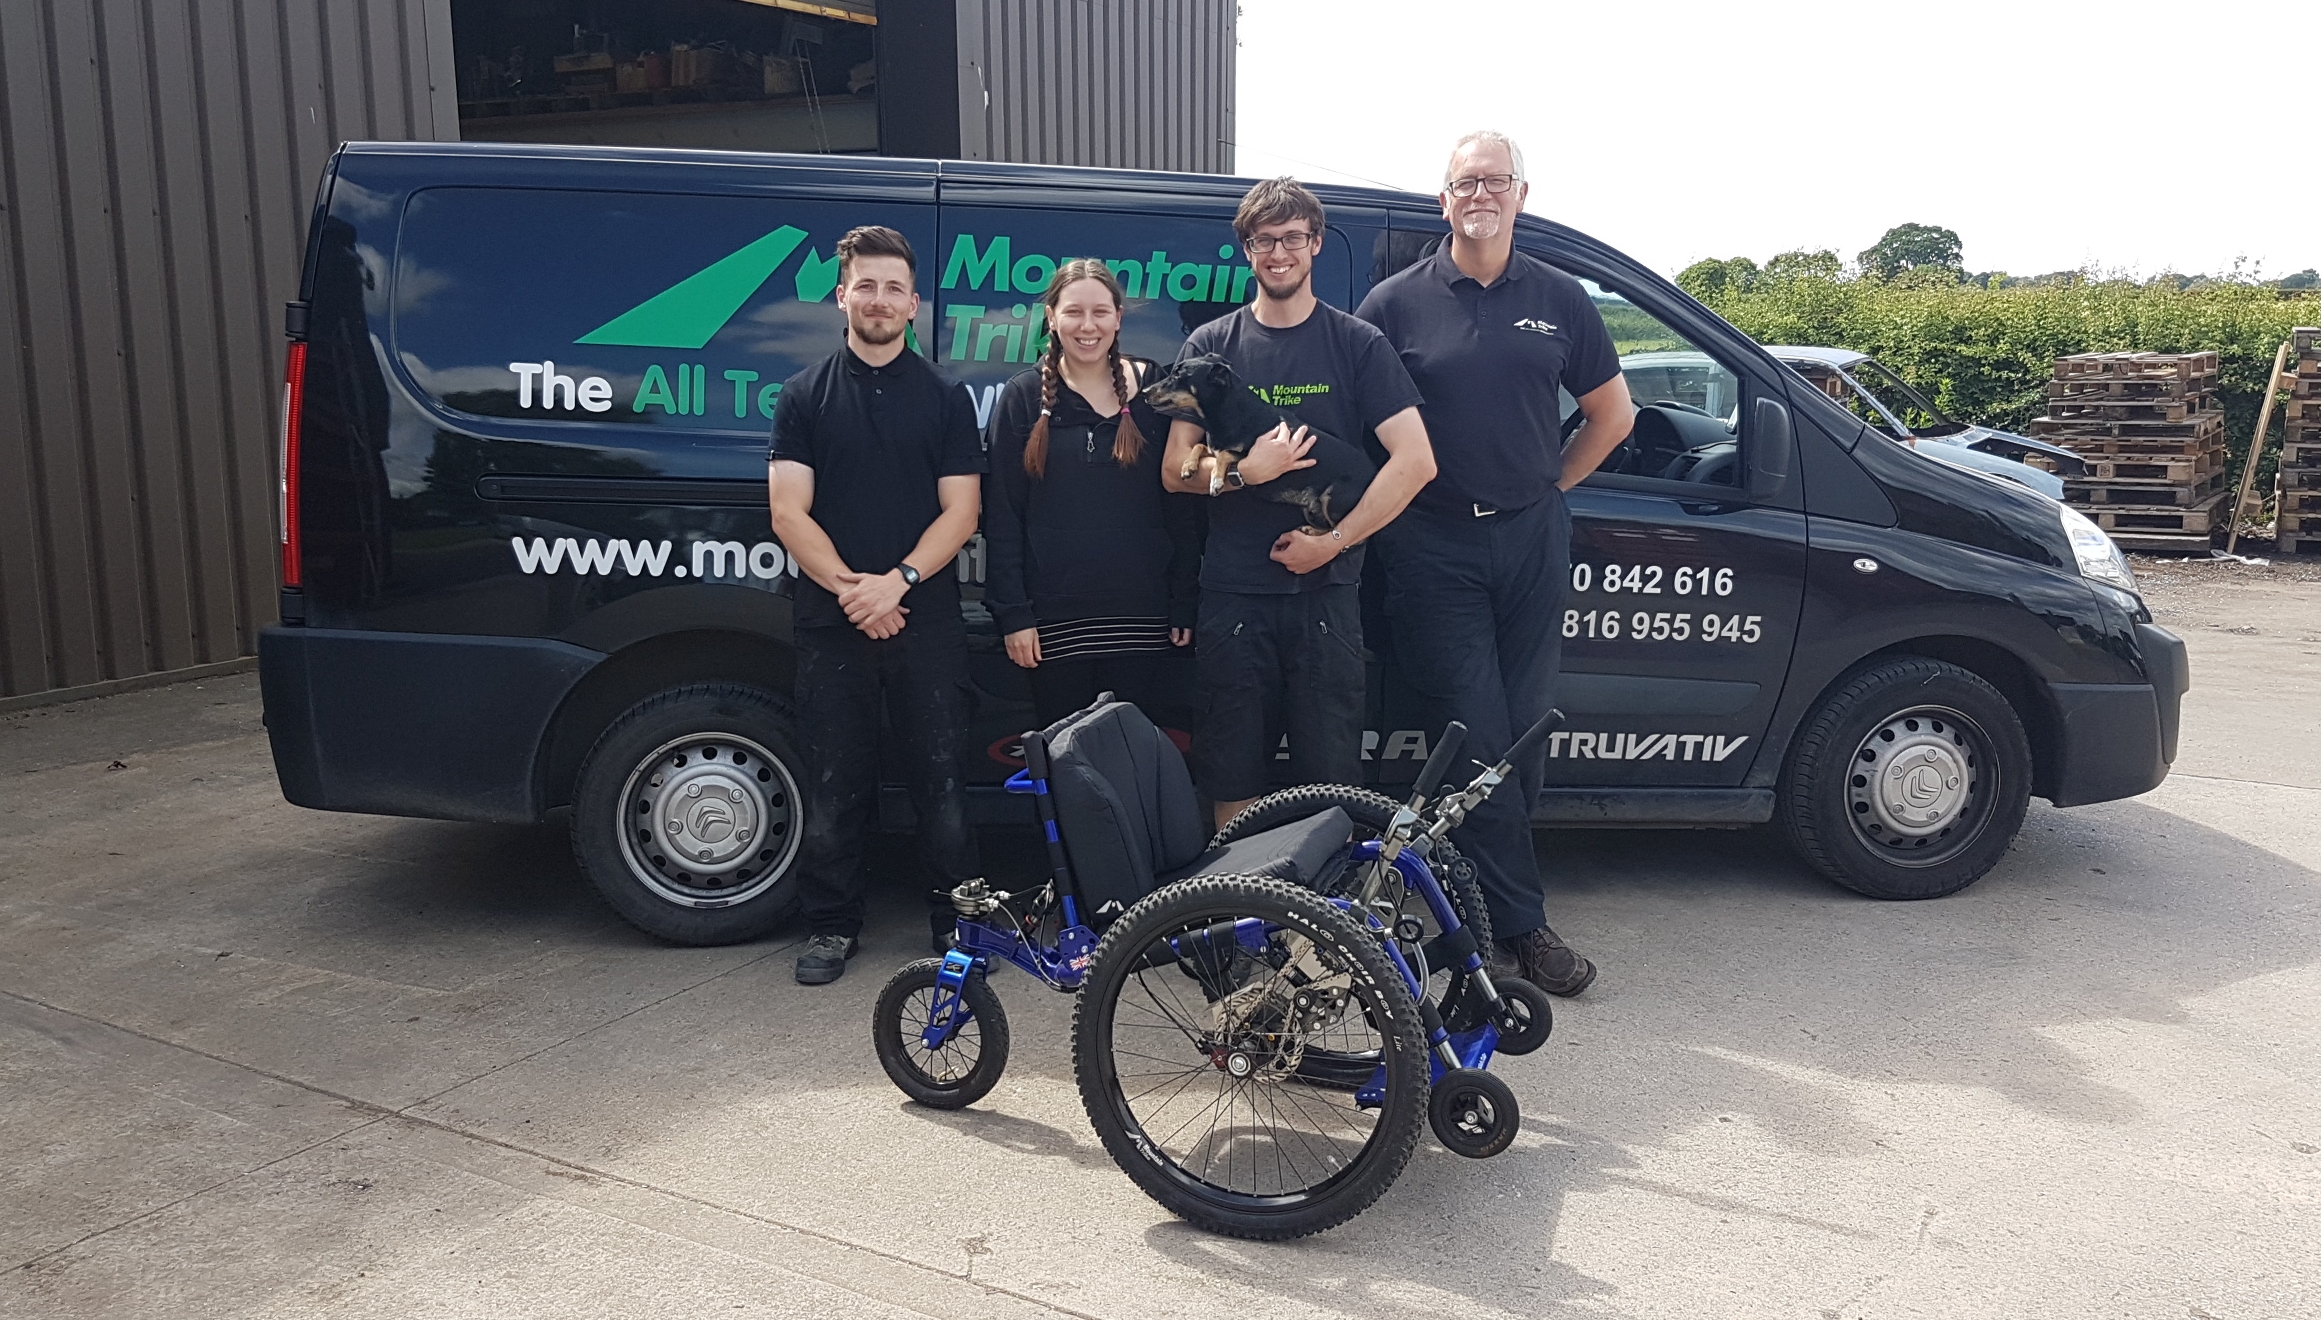 Mountain Trike Company HQ, Cheshire